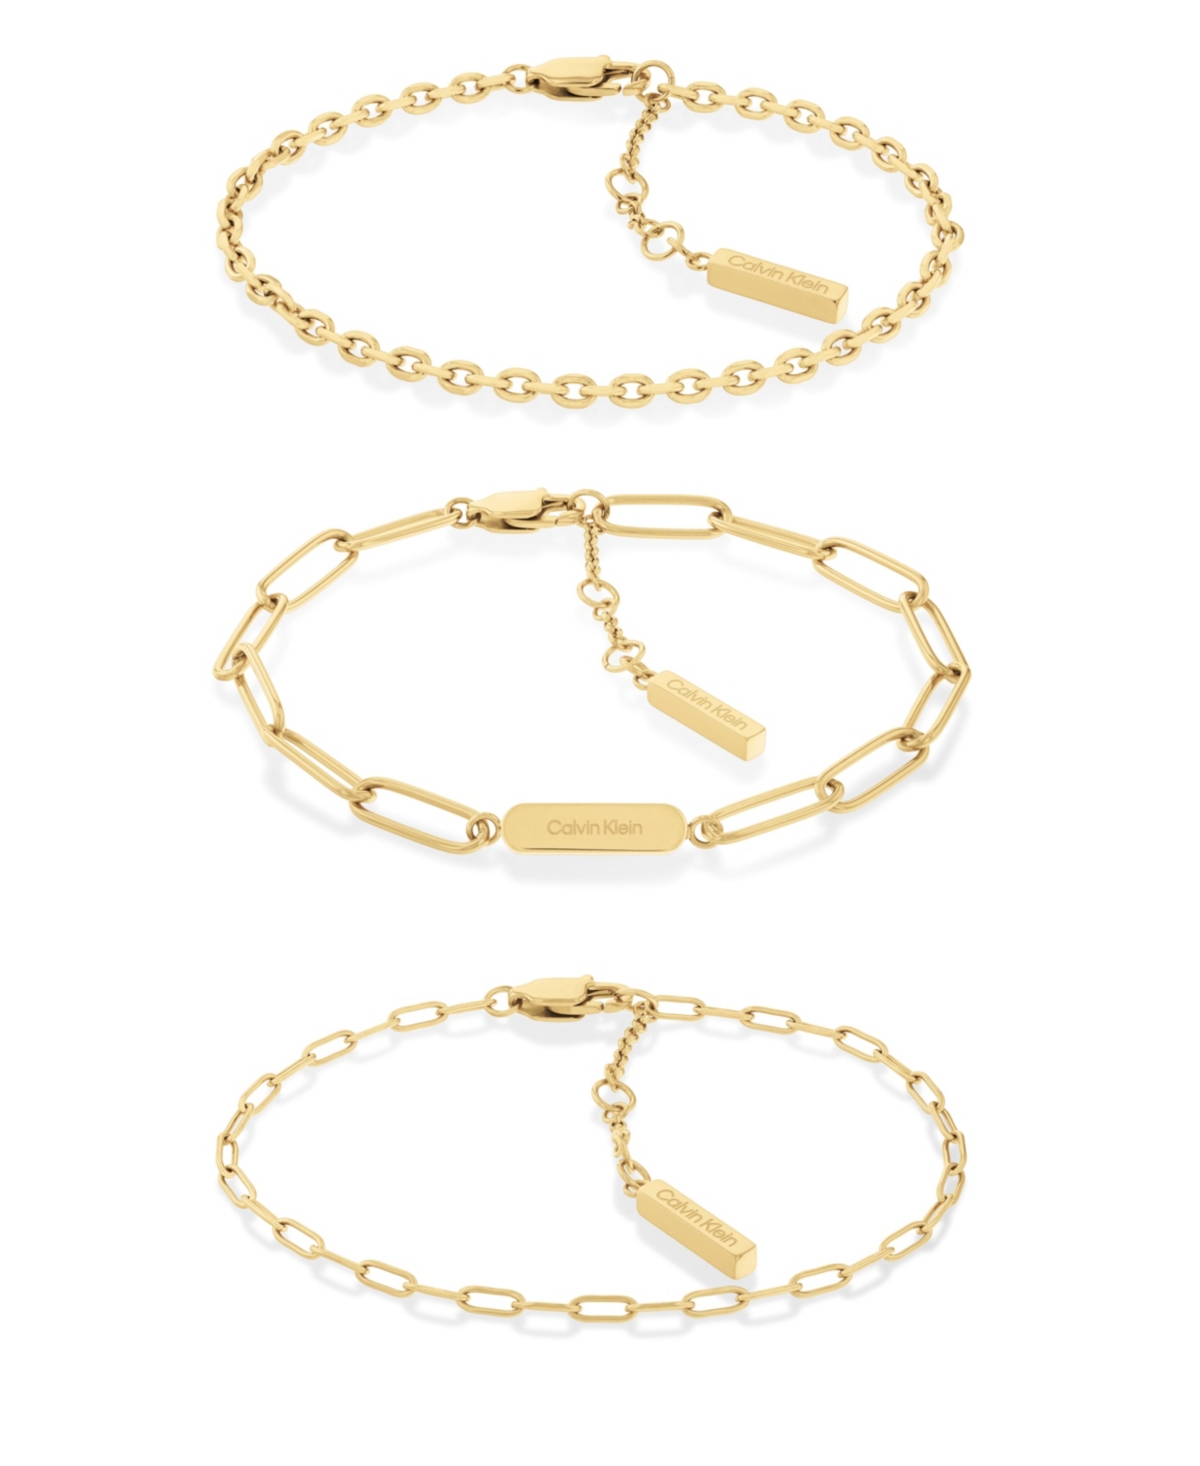 Women's Stainless Steel Chain Bracelet Gift Set, 3 Piece - Gold Tone